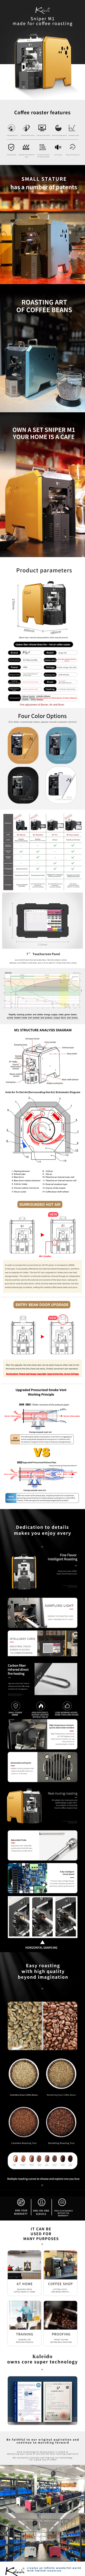 the coffee bean roasting house